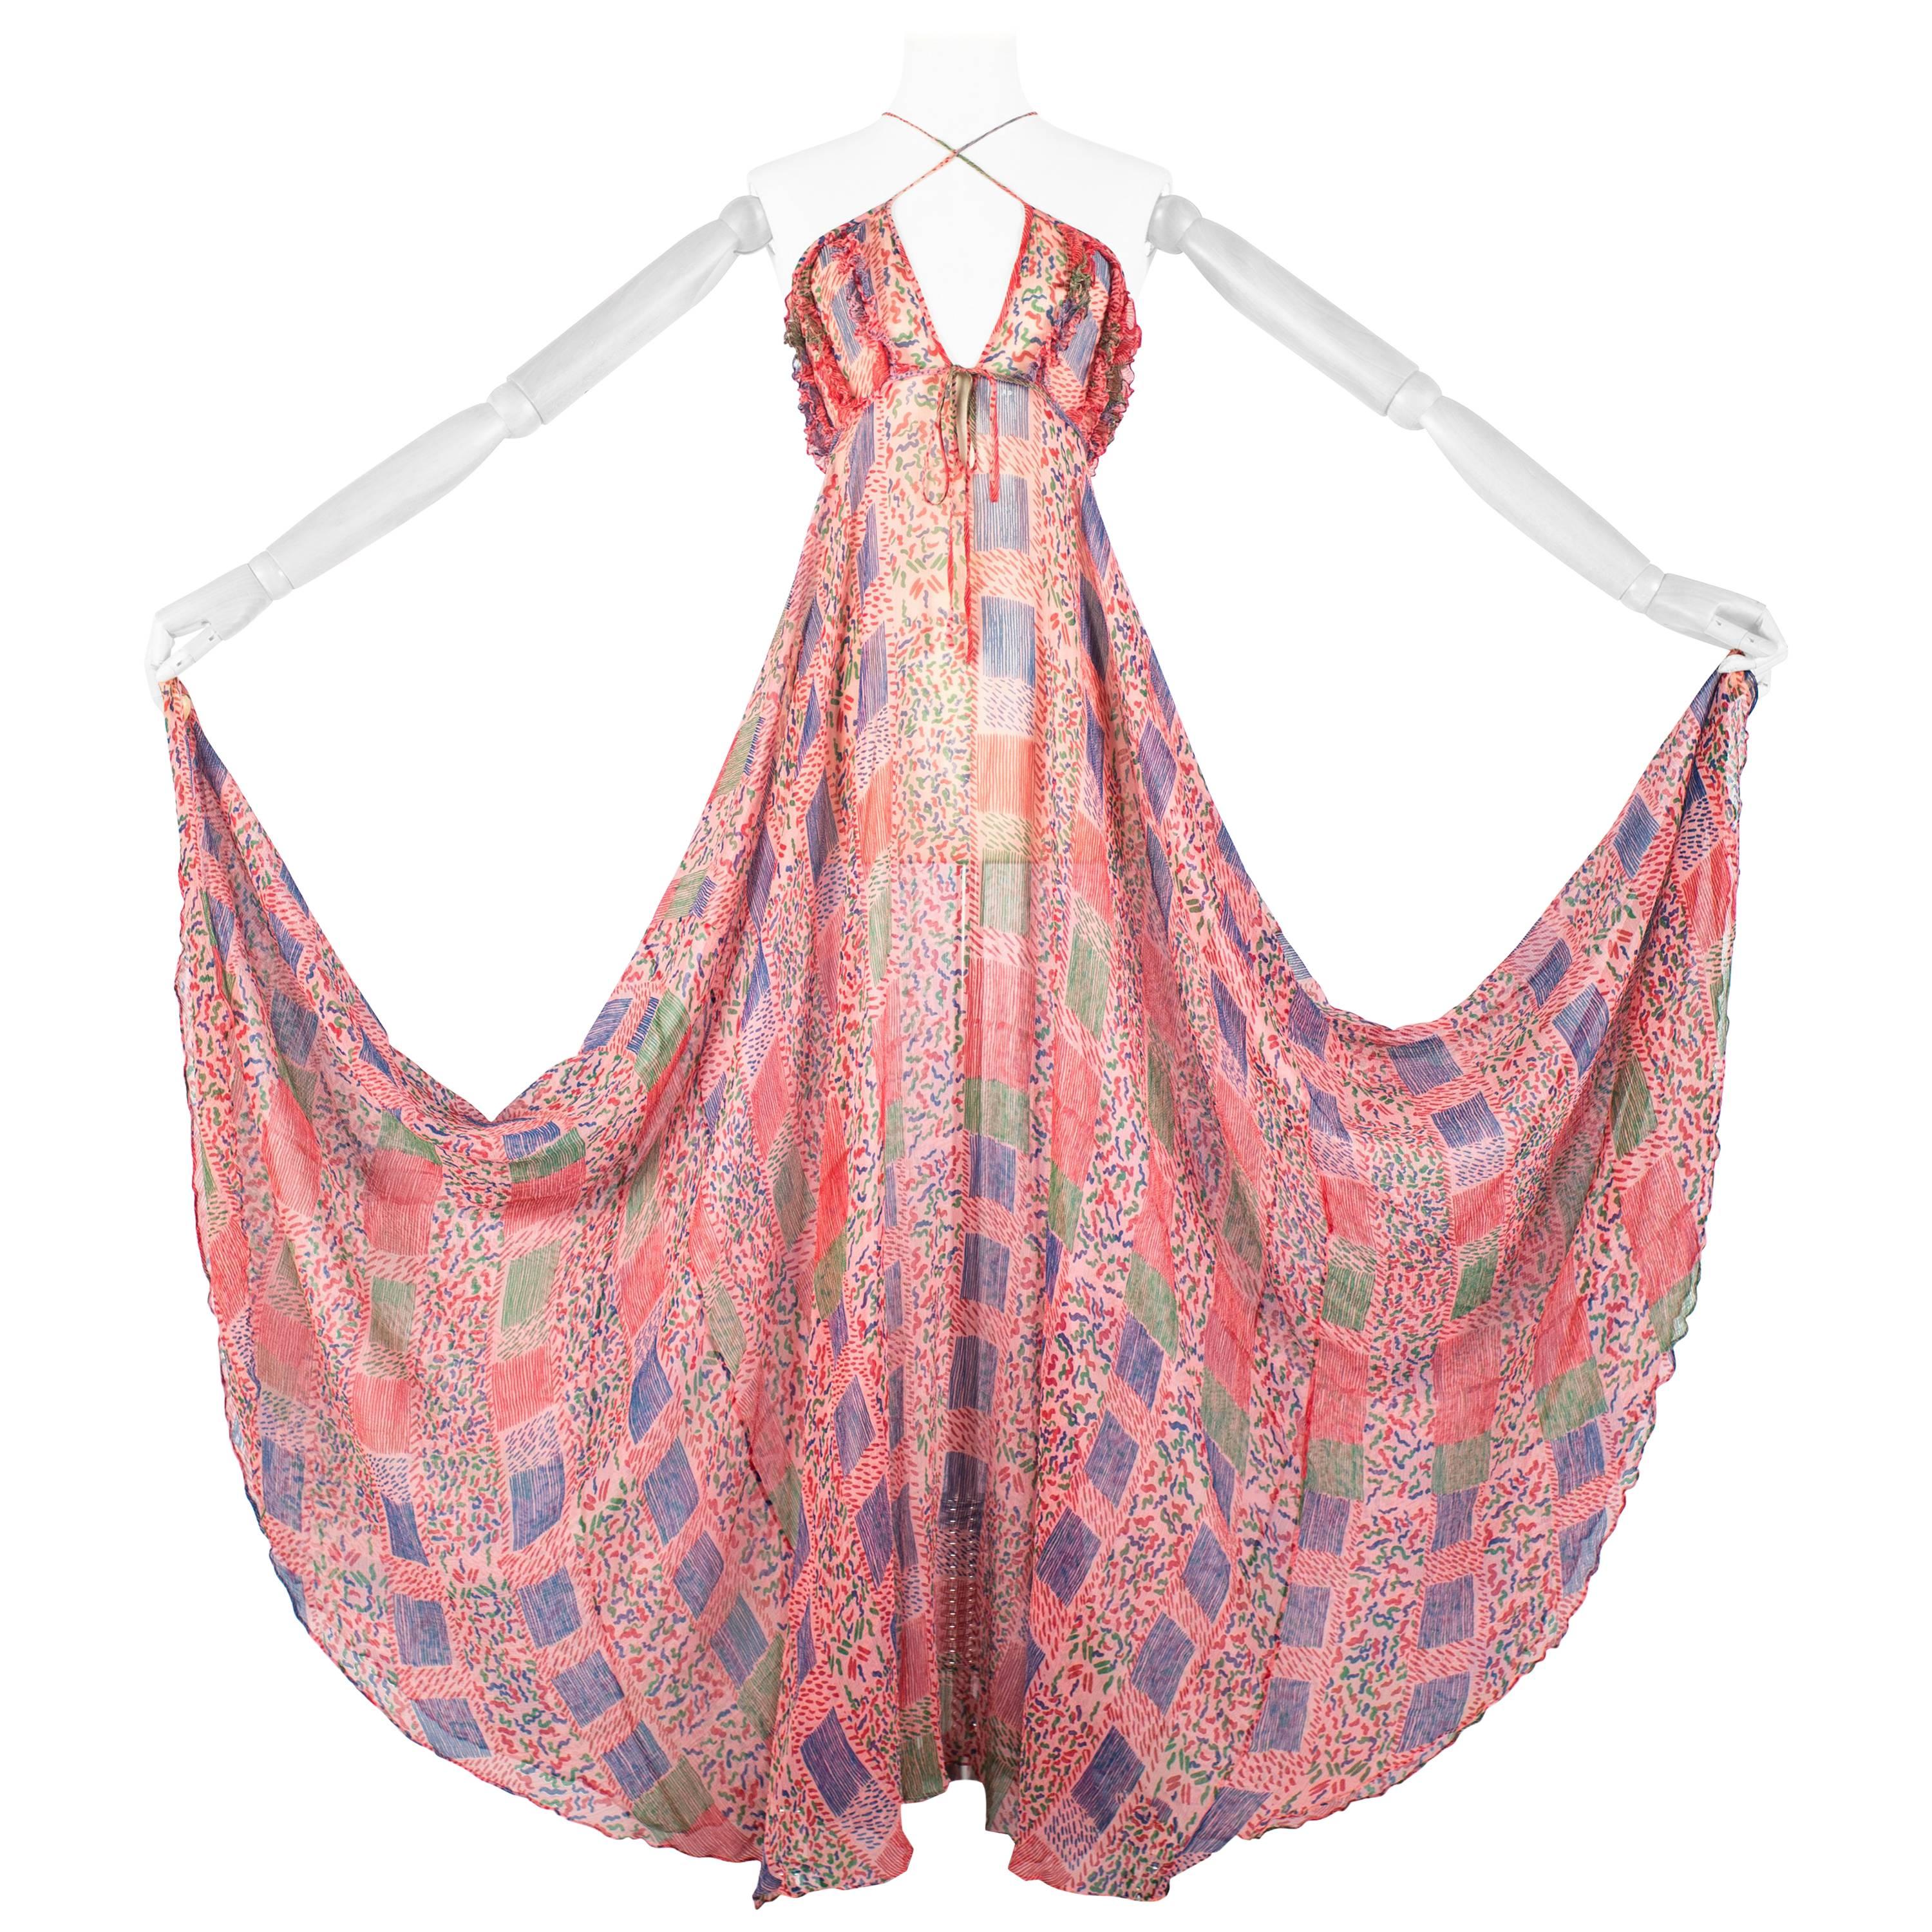 Ossie Clark / Celia Birtwell chiffon maxi dress with criss-cross lacing, c1976